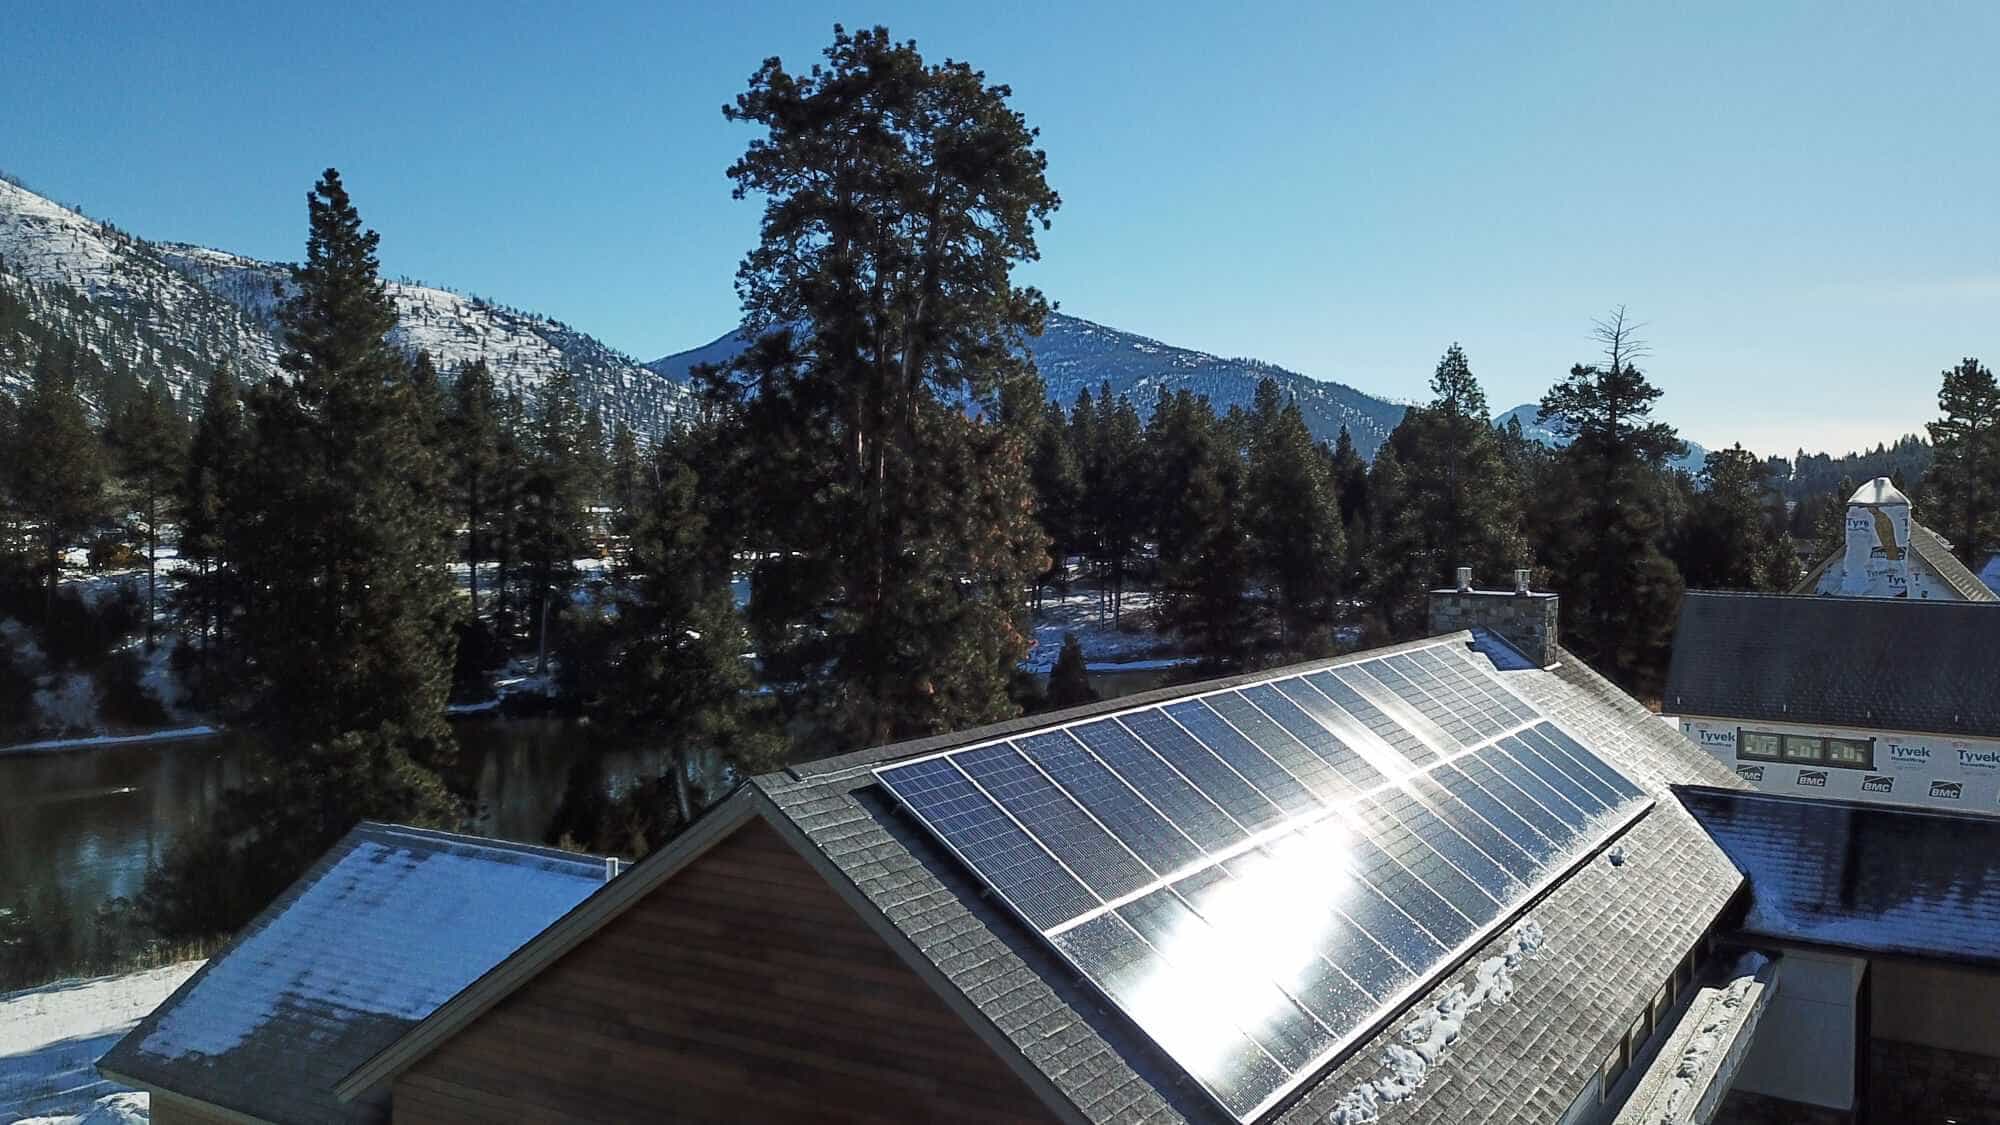 Solar panels in winter